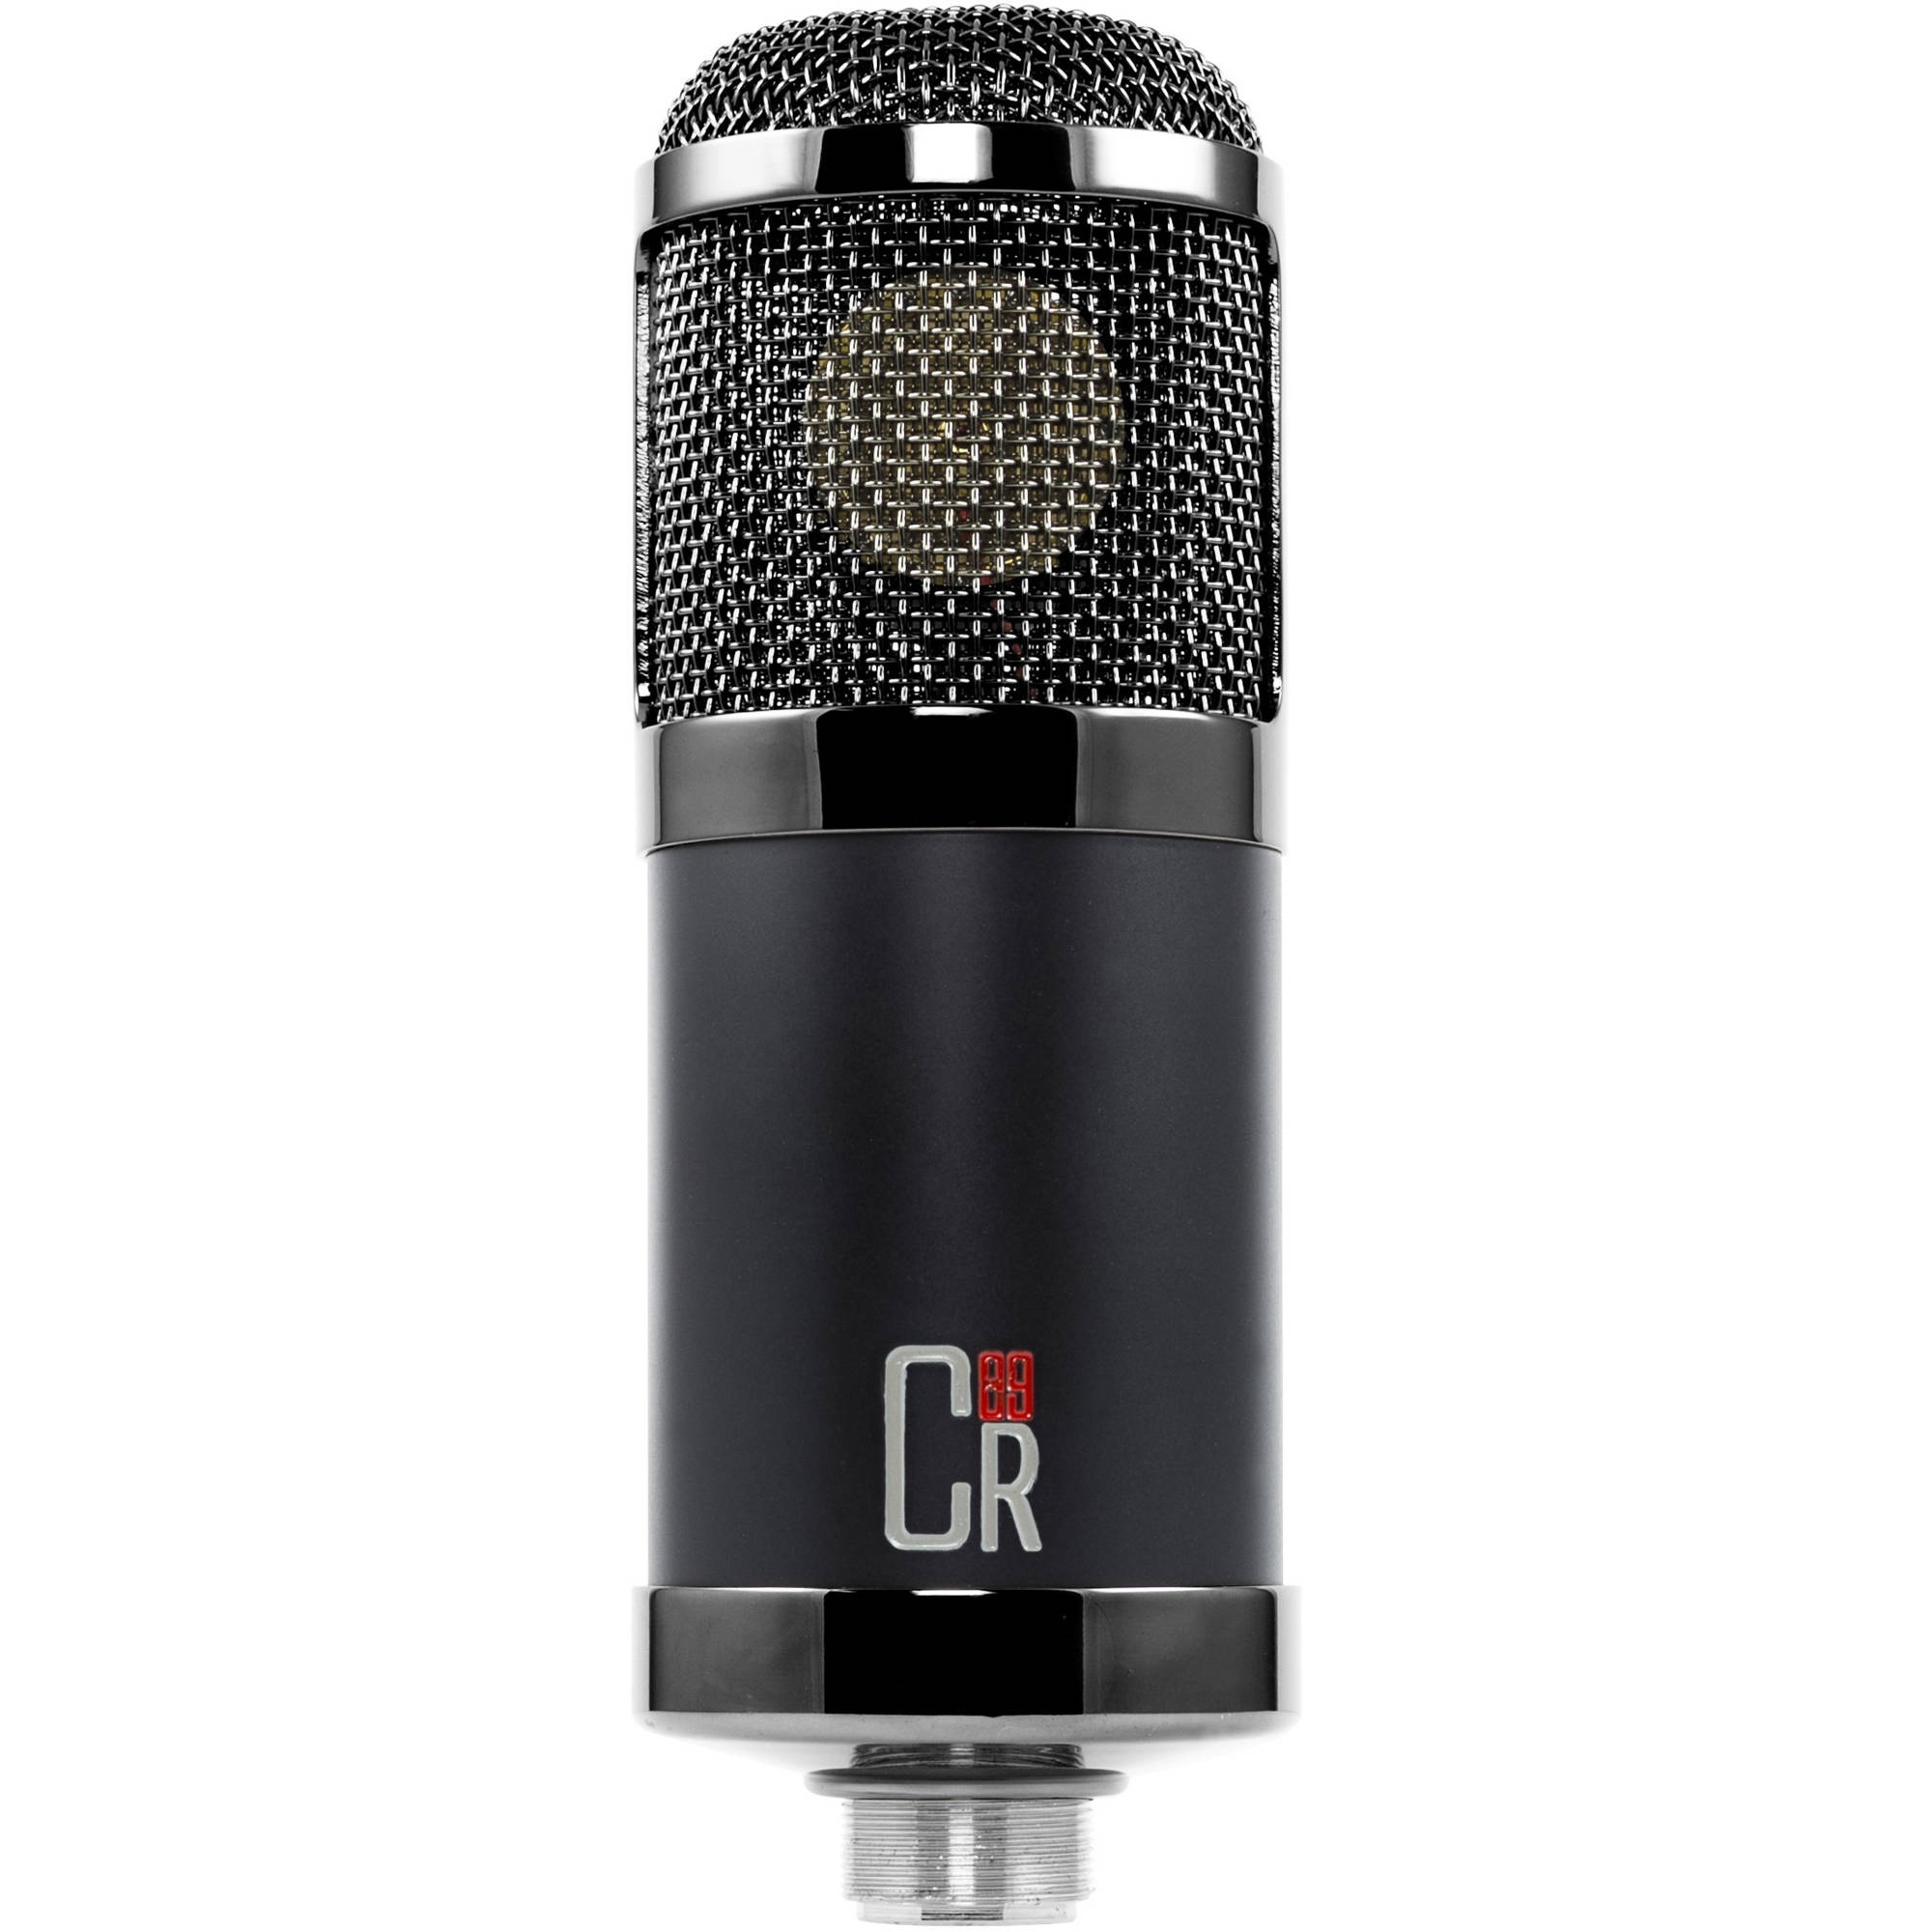 MXL Low-Noise Large-Diaphragm Condenser Microphone